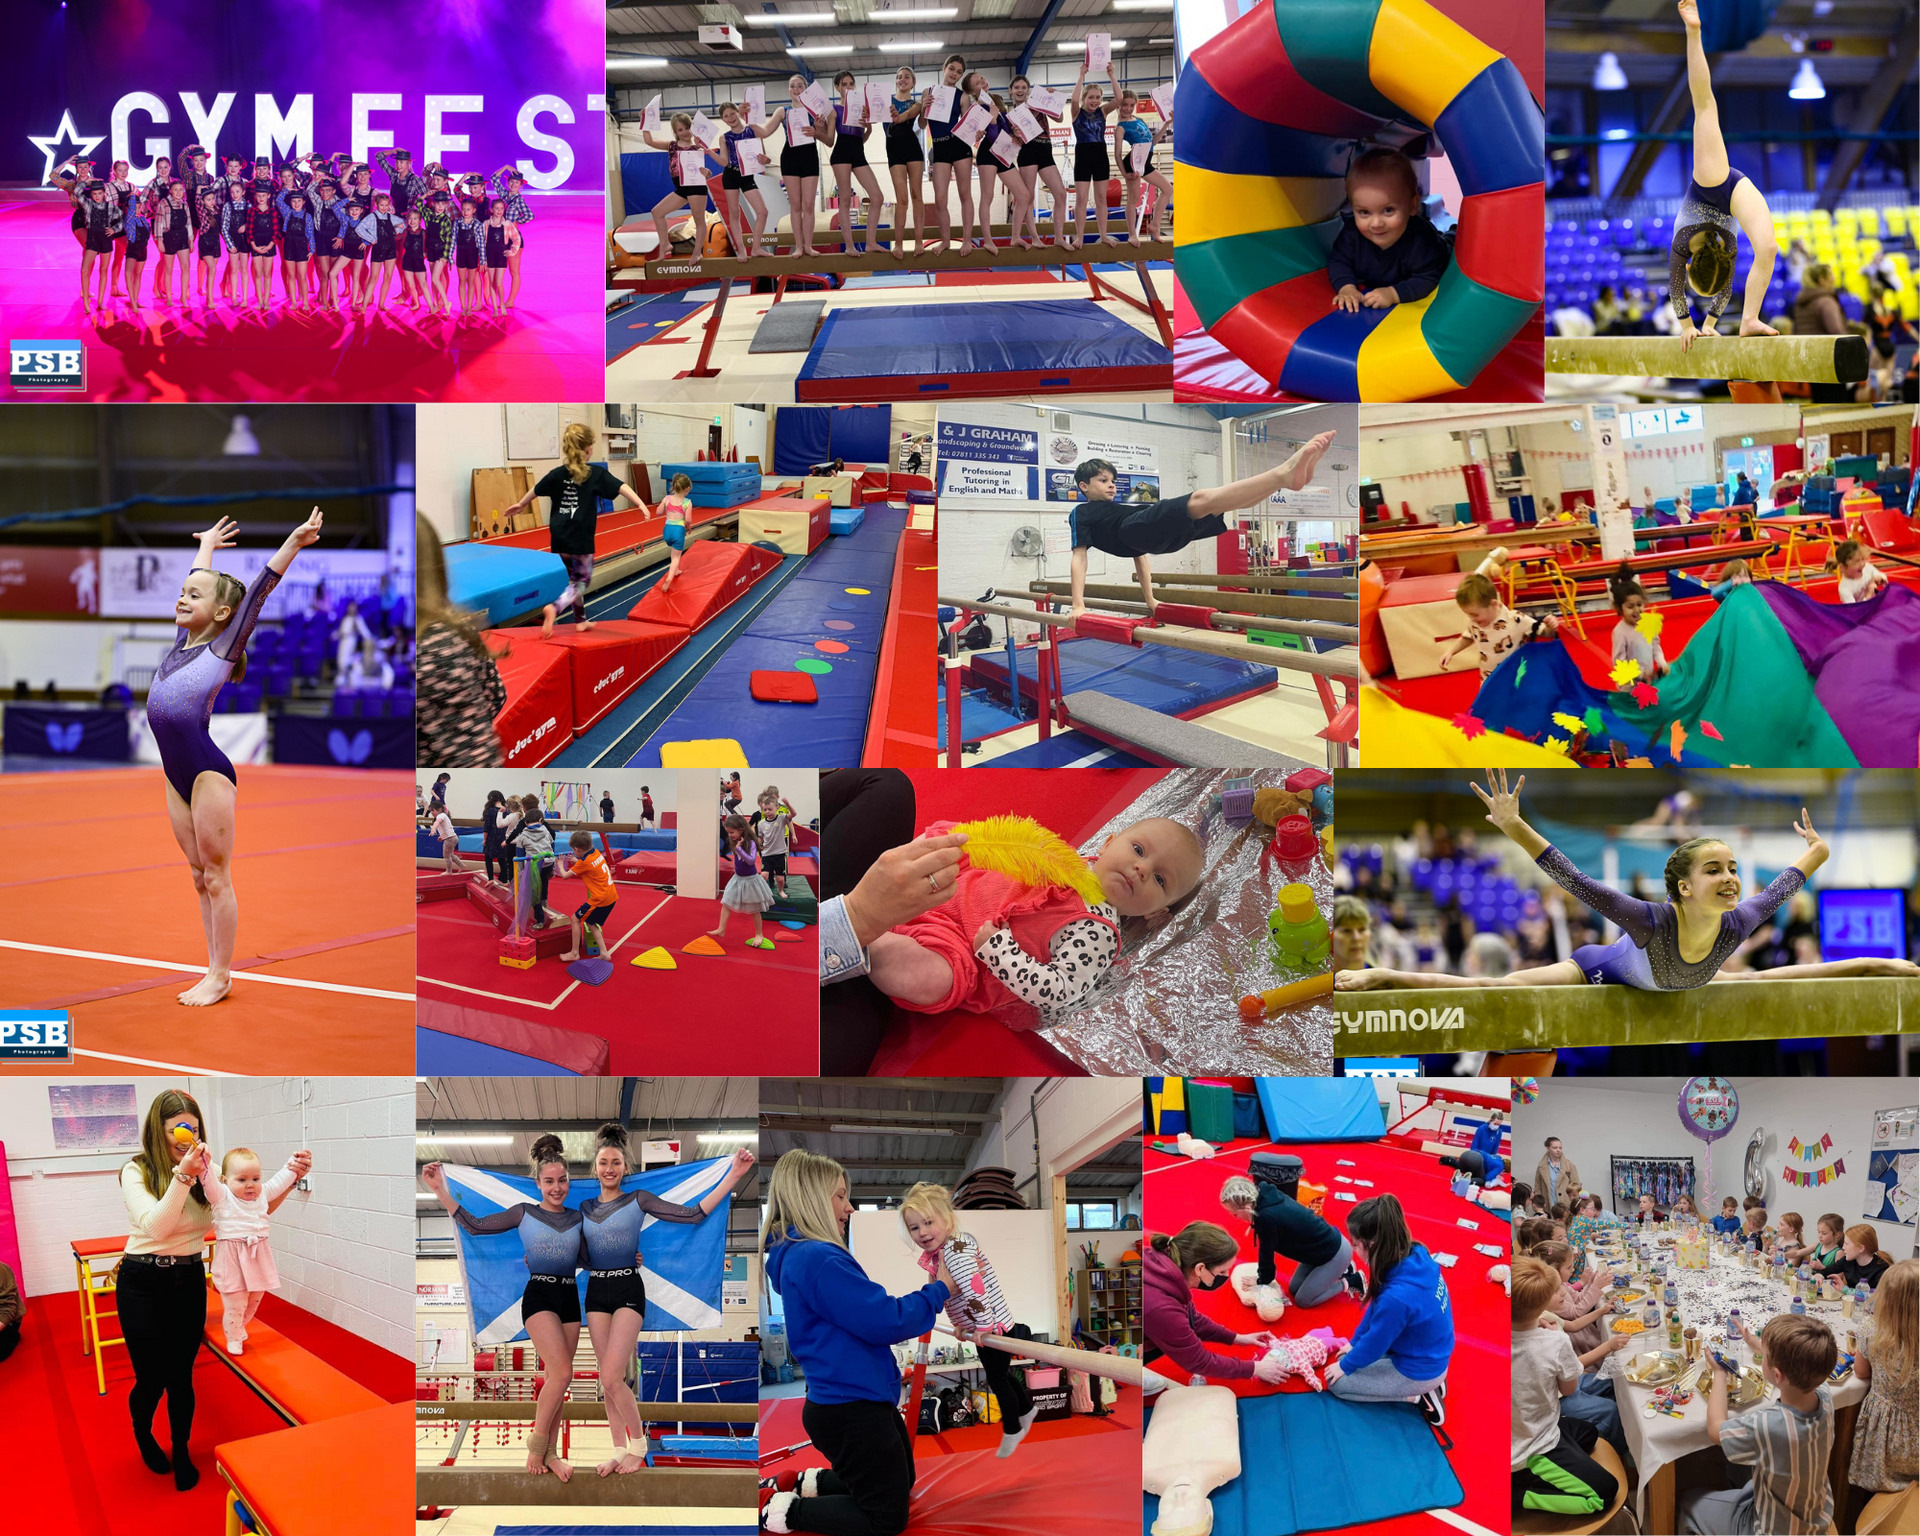 Gymnastics classes for children, Dumfries. The Dumfries Y Gymnastics Club.